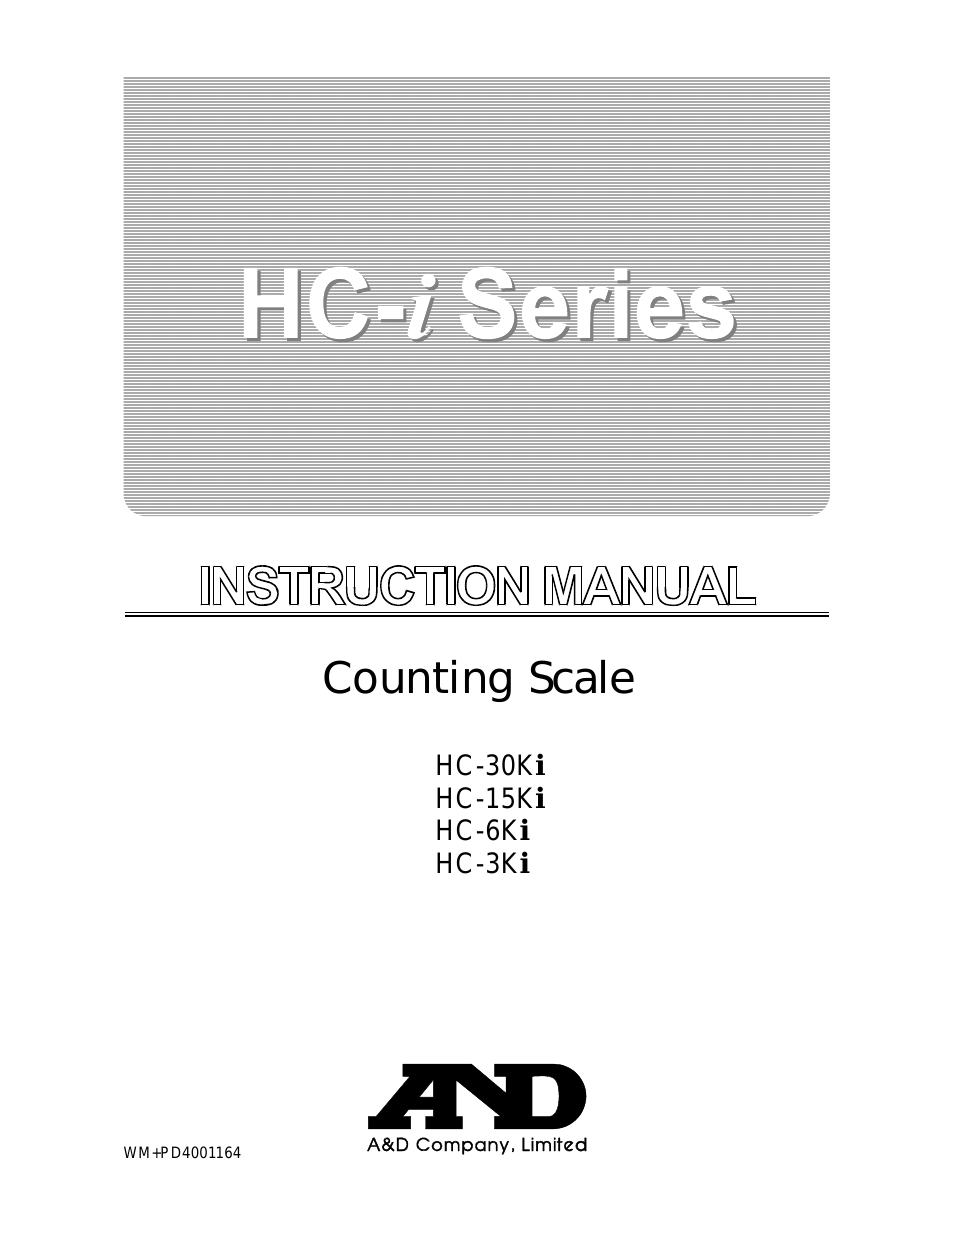 Counting Scale HC-6Ki